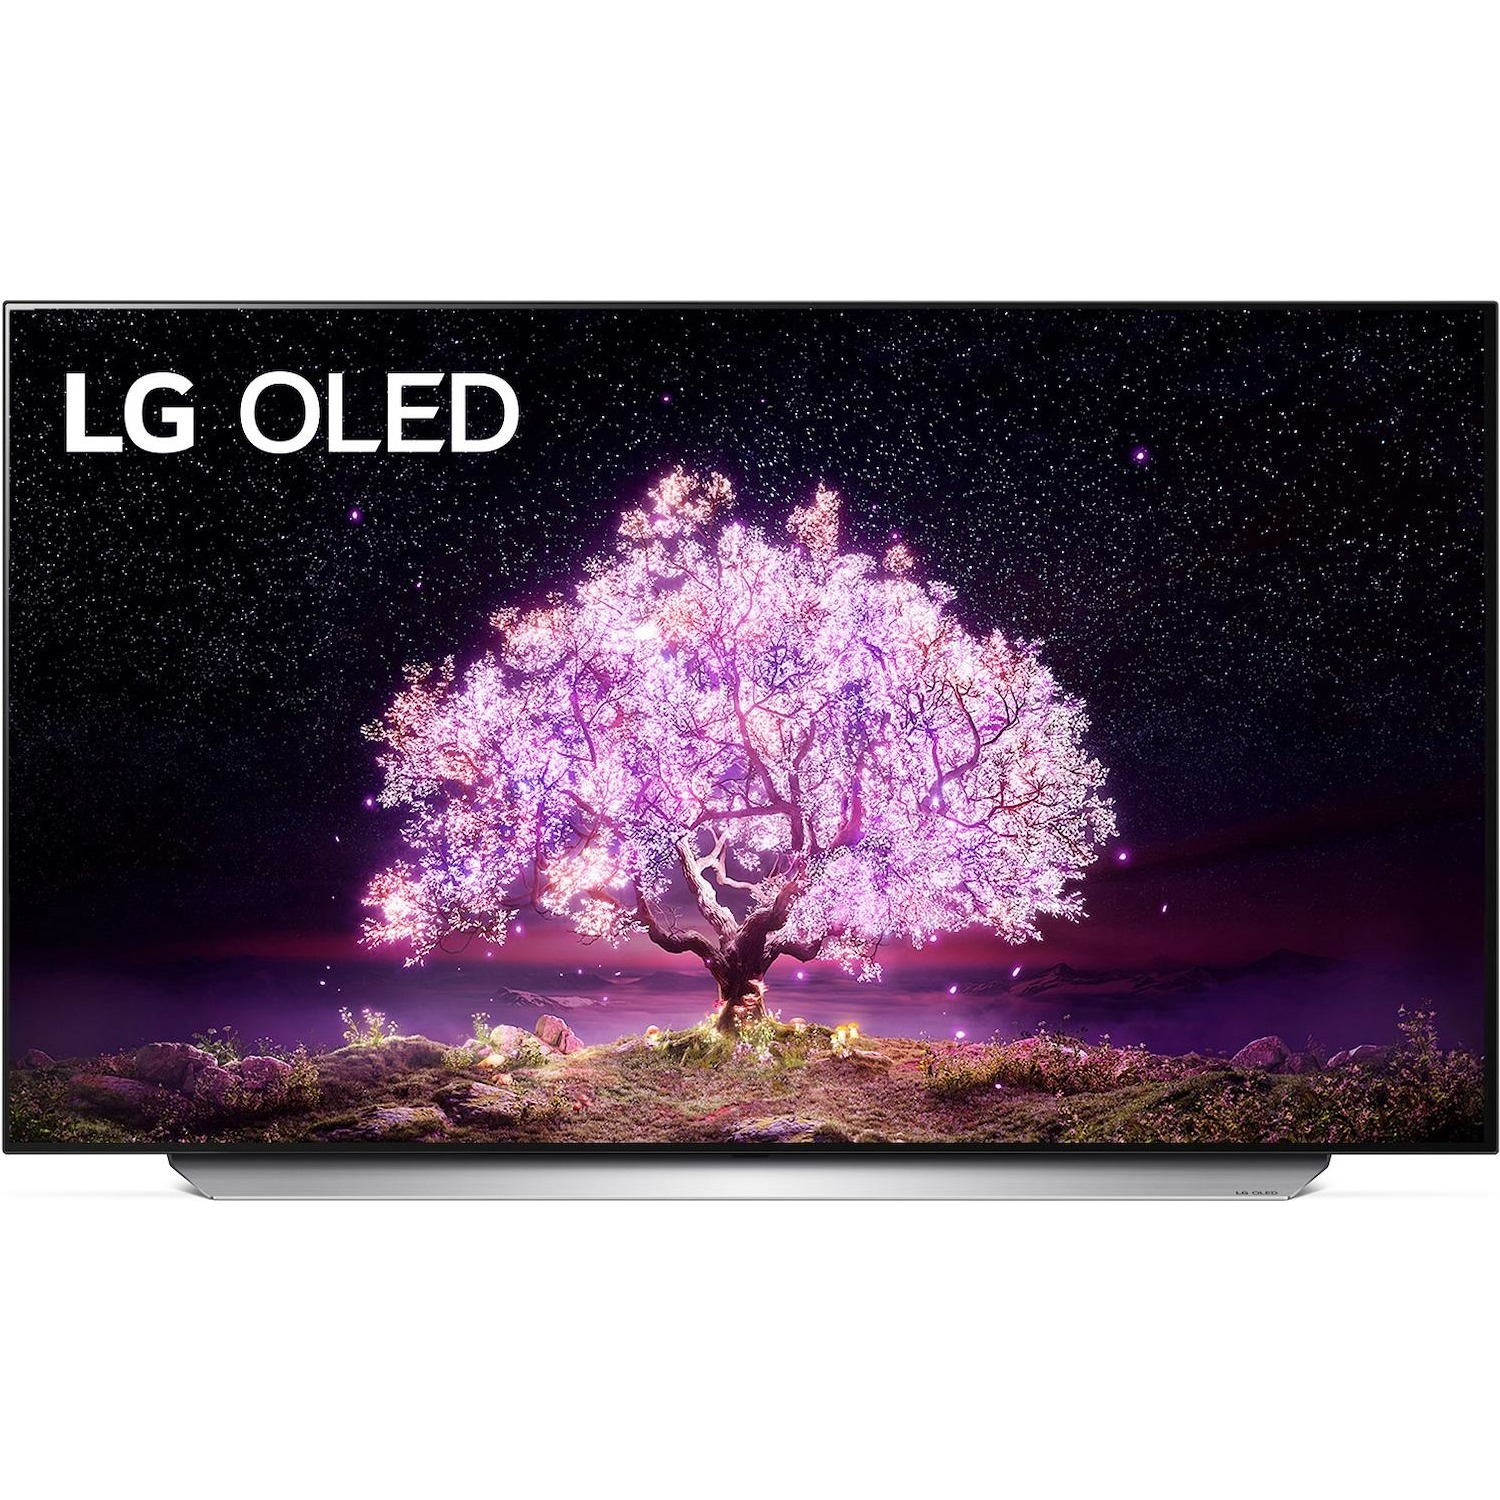 Immagine per TV OLED UHD 4K Smart LG OLED48C16 da DIMOStore